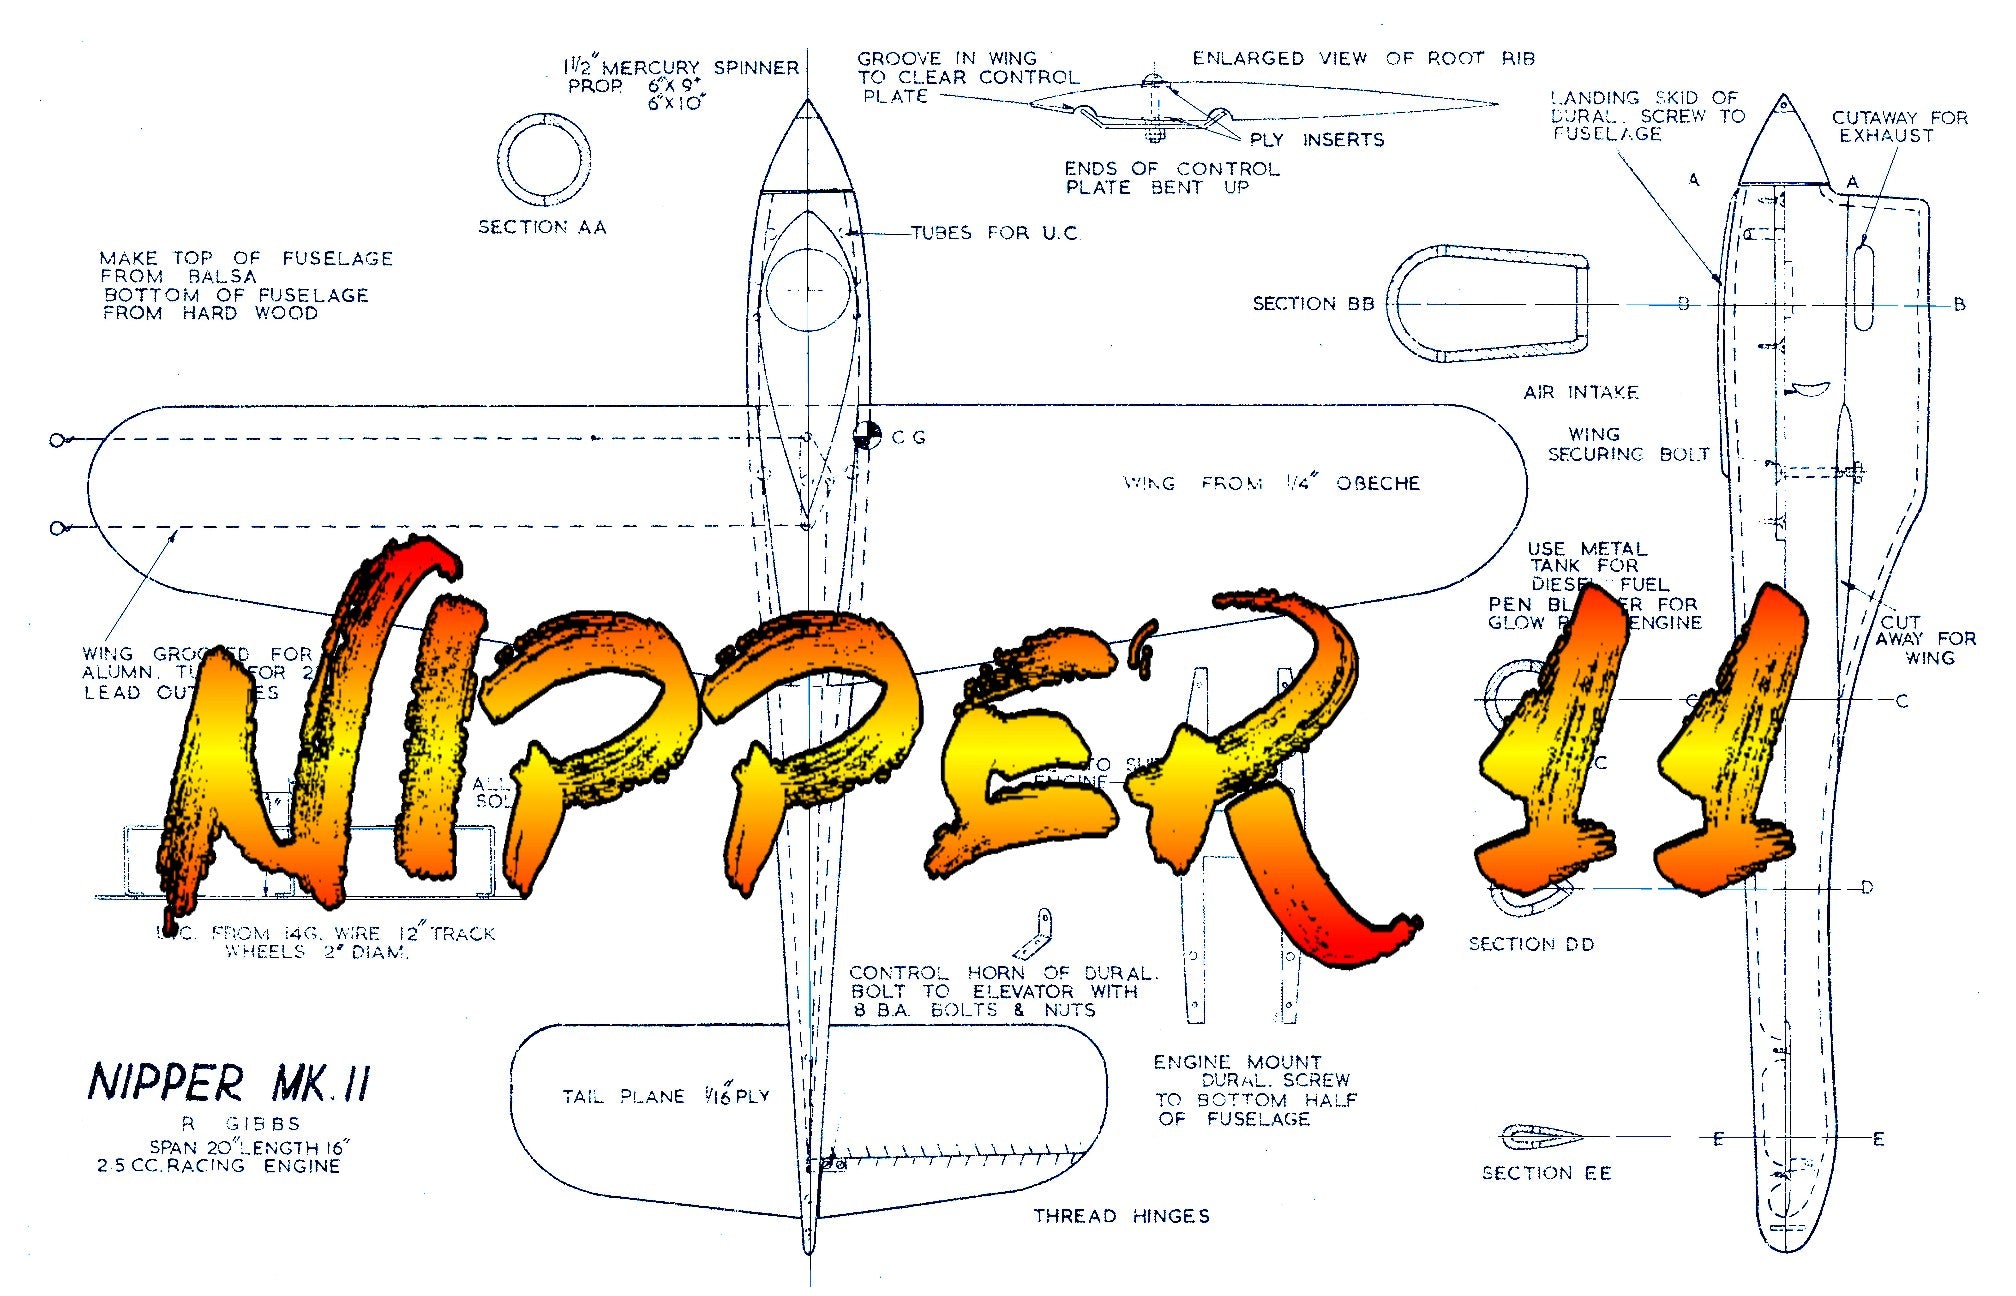 full size printed plan  vintage 1958 control line speed "nipper ii" wingspan 20"  engine .15